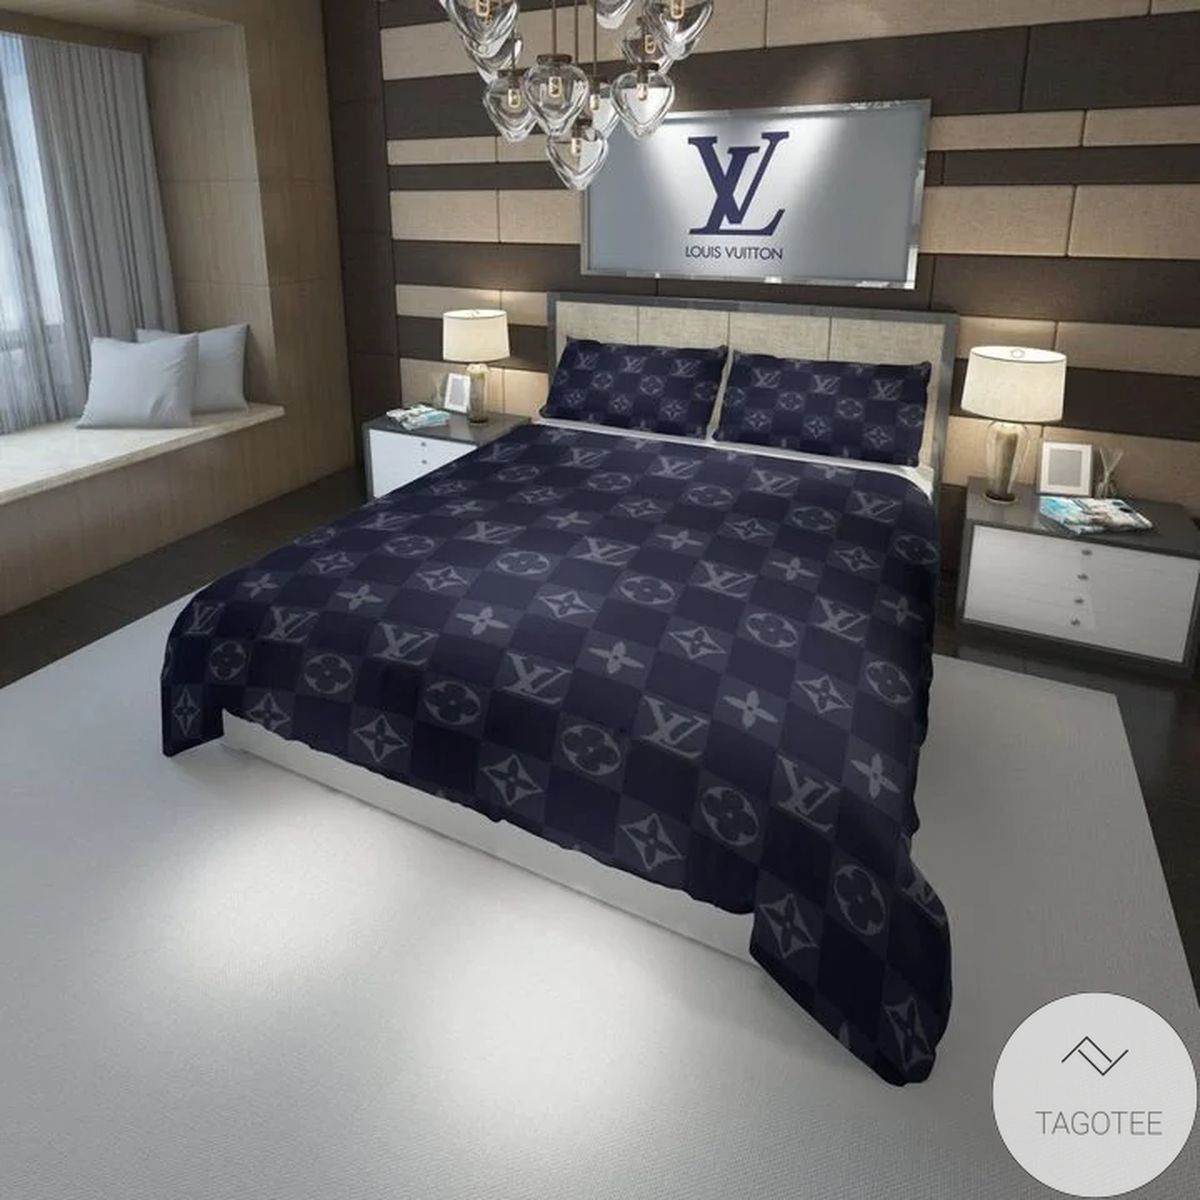 Louis Vuitton Monochrome Navy Bedding Set